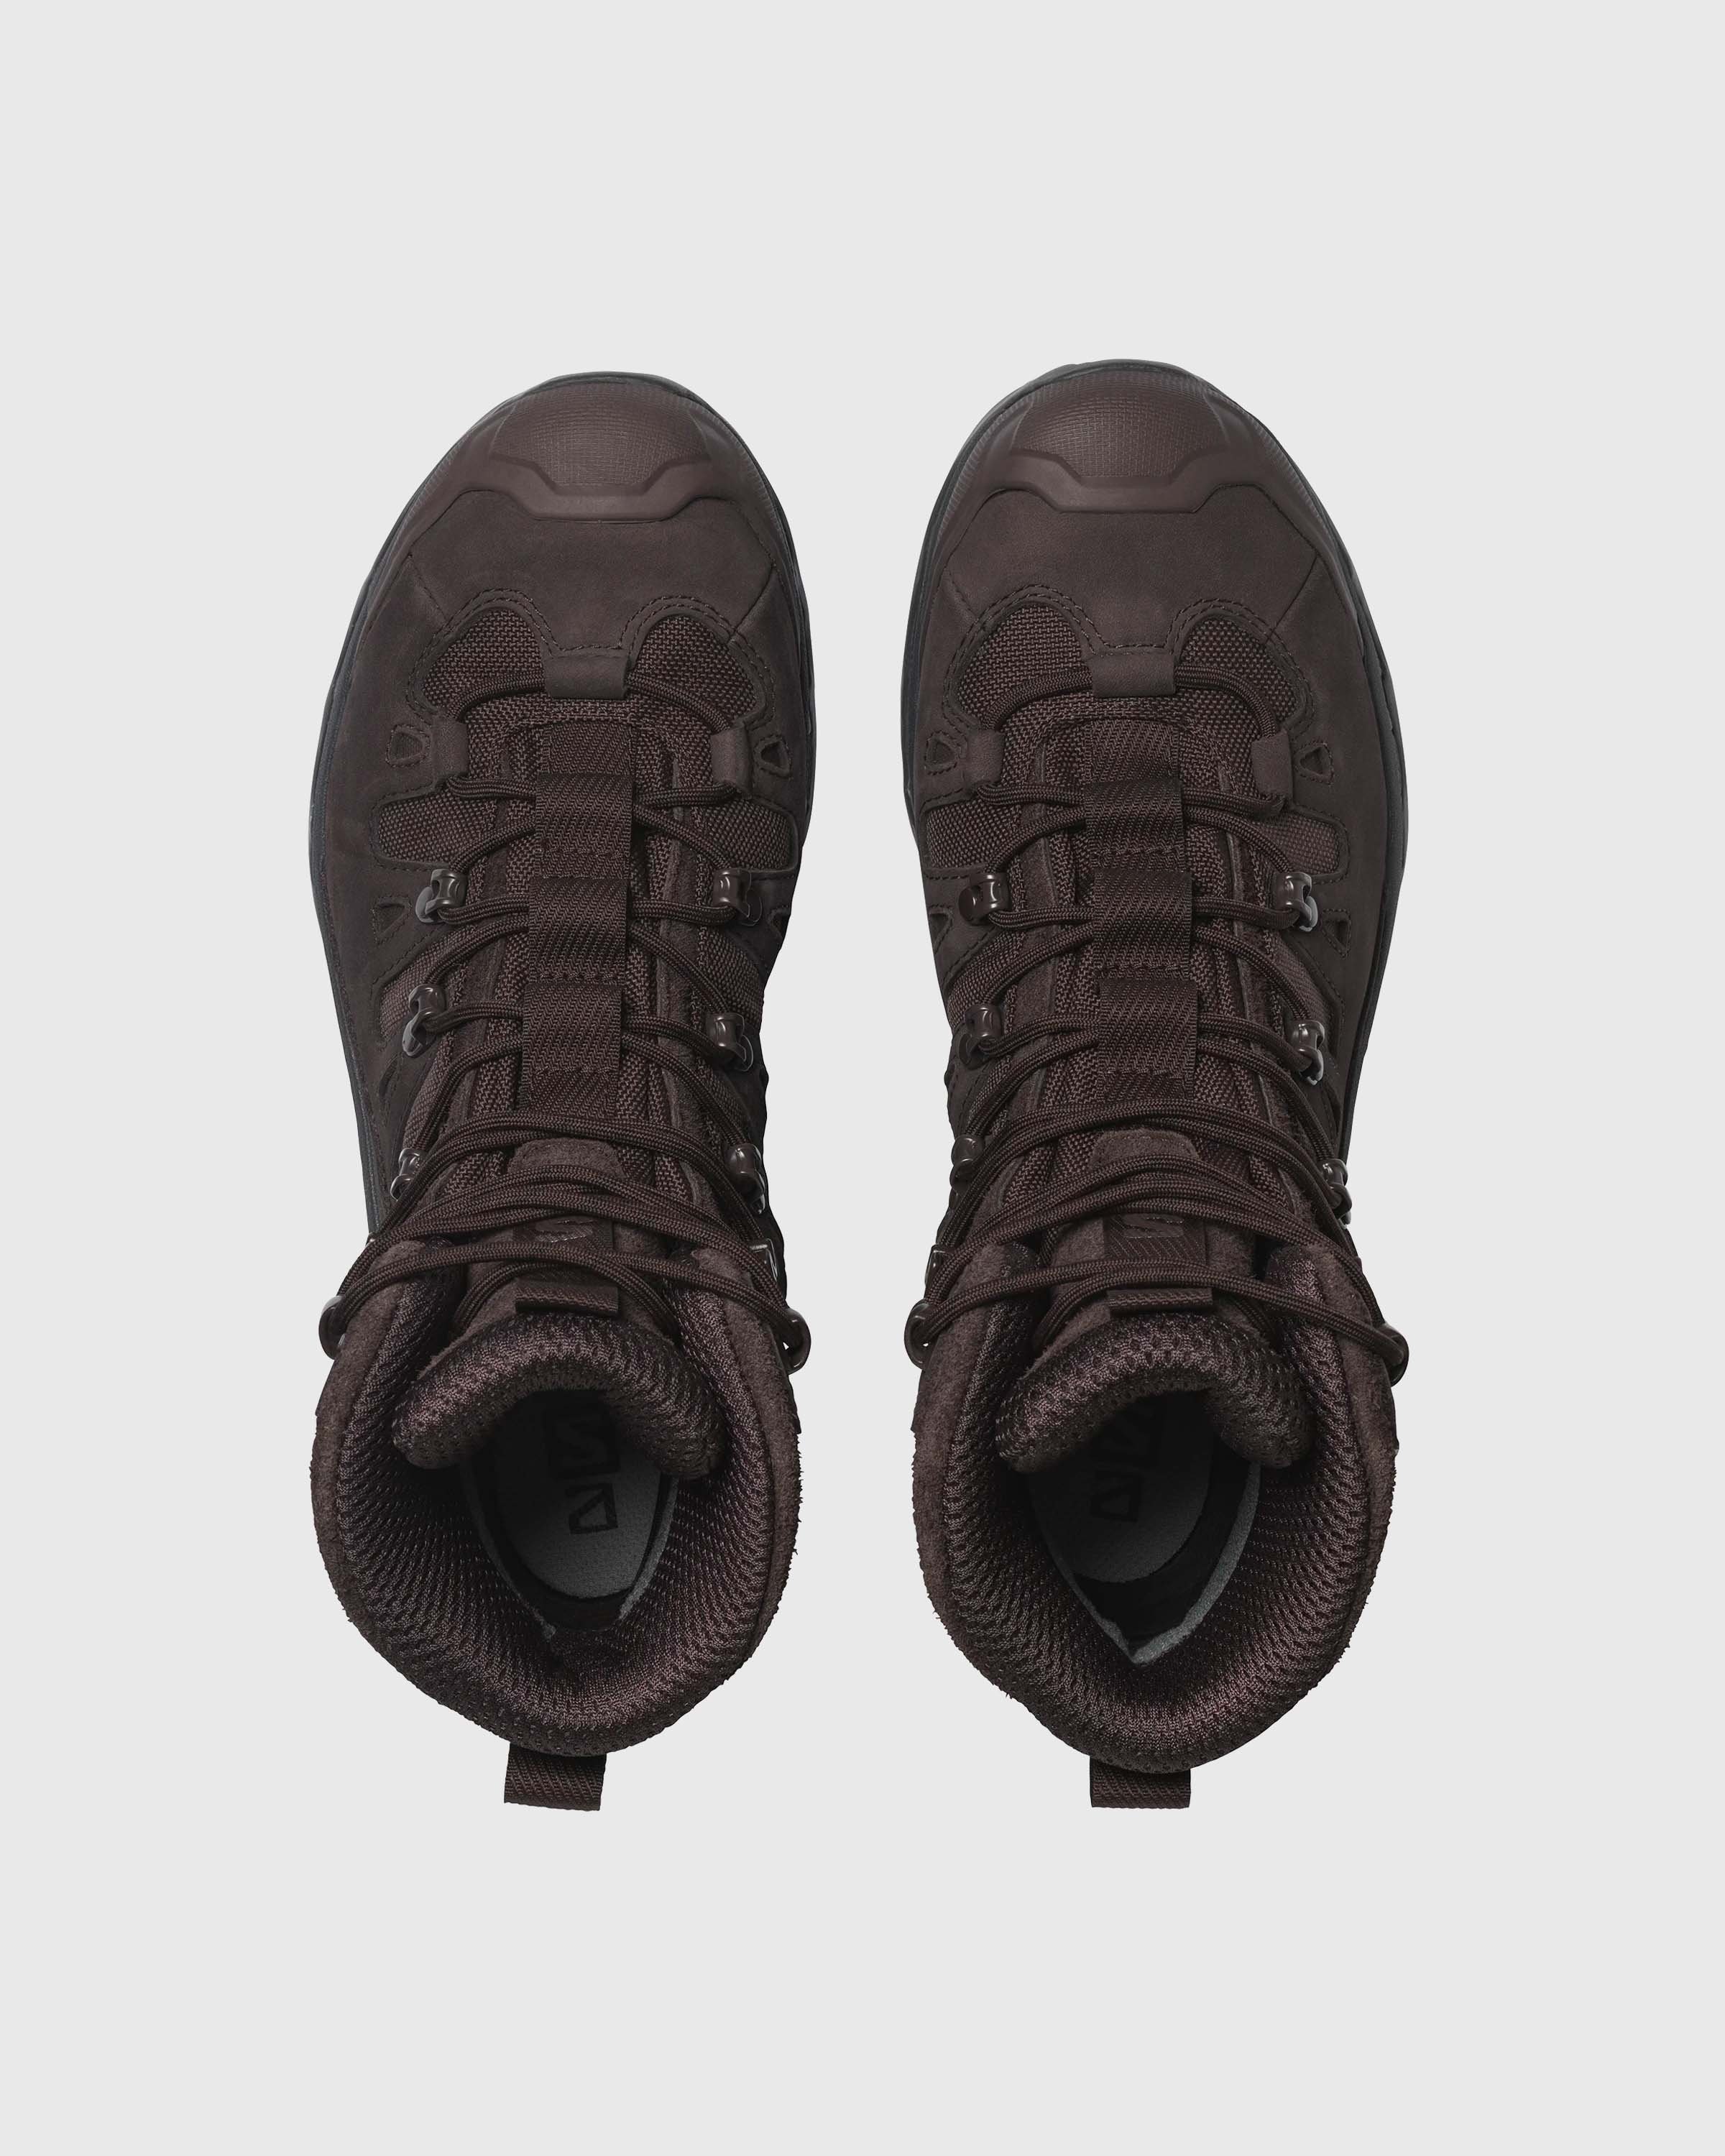 Salomon - Quest 4D GTX Advanced Chocolate Plum - Footwear - Brown - Image 4